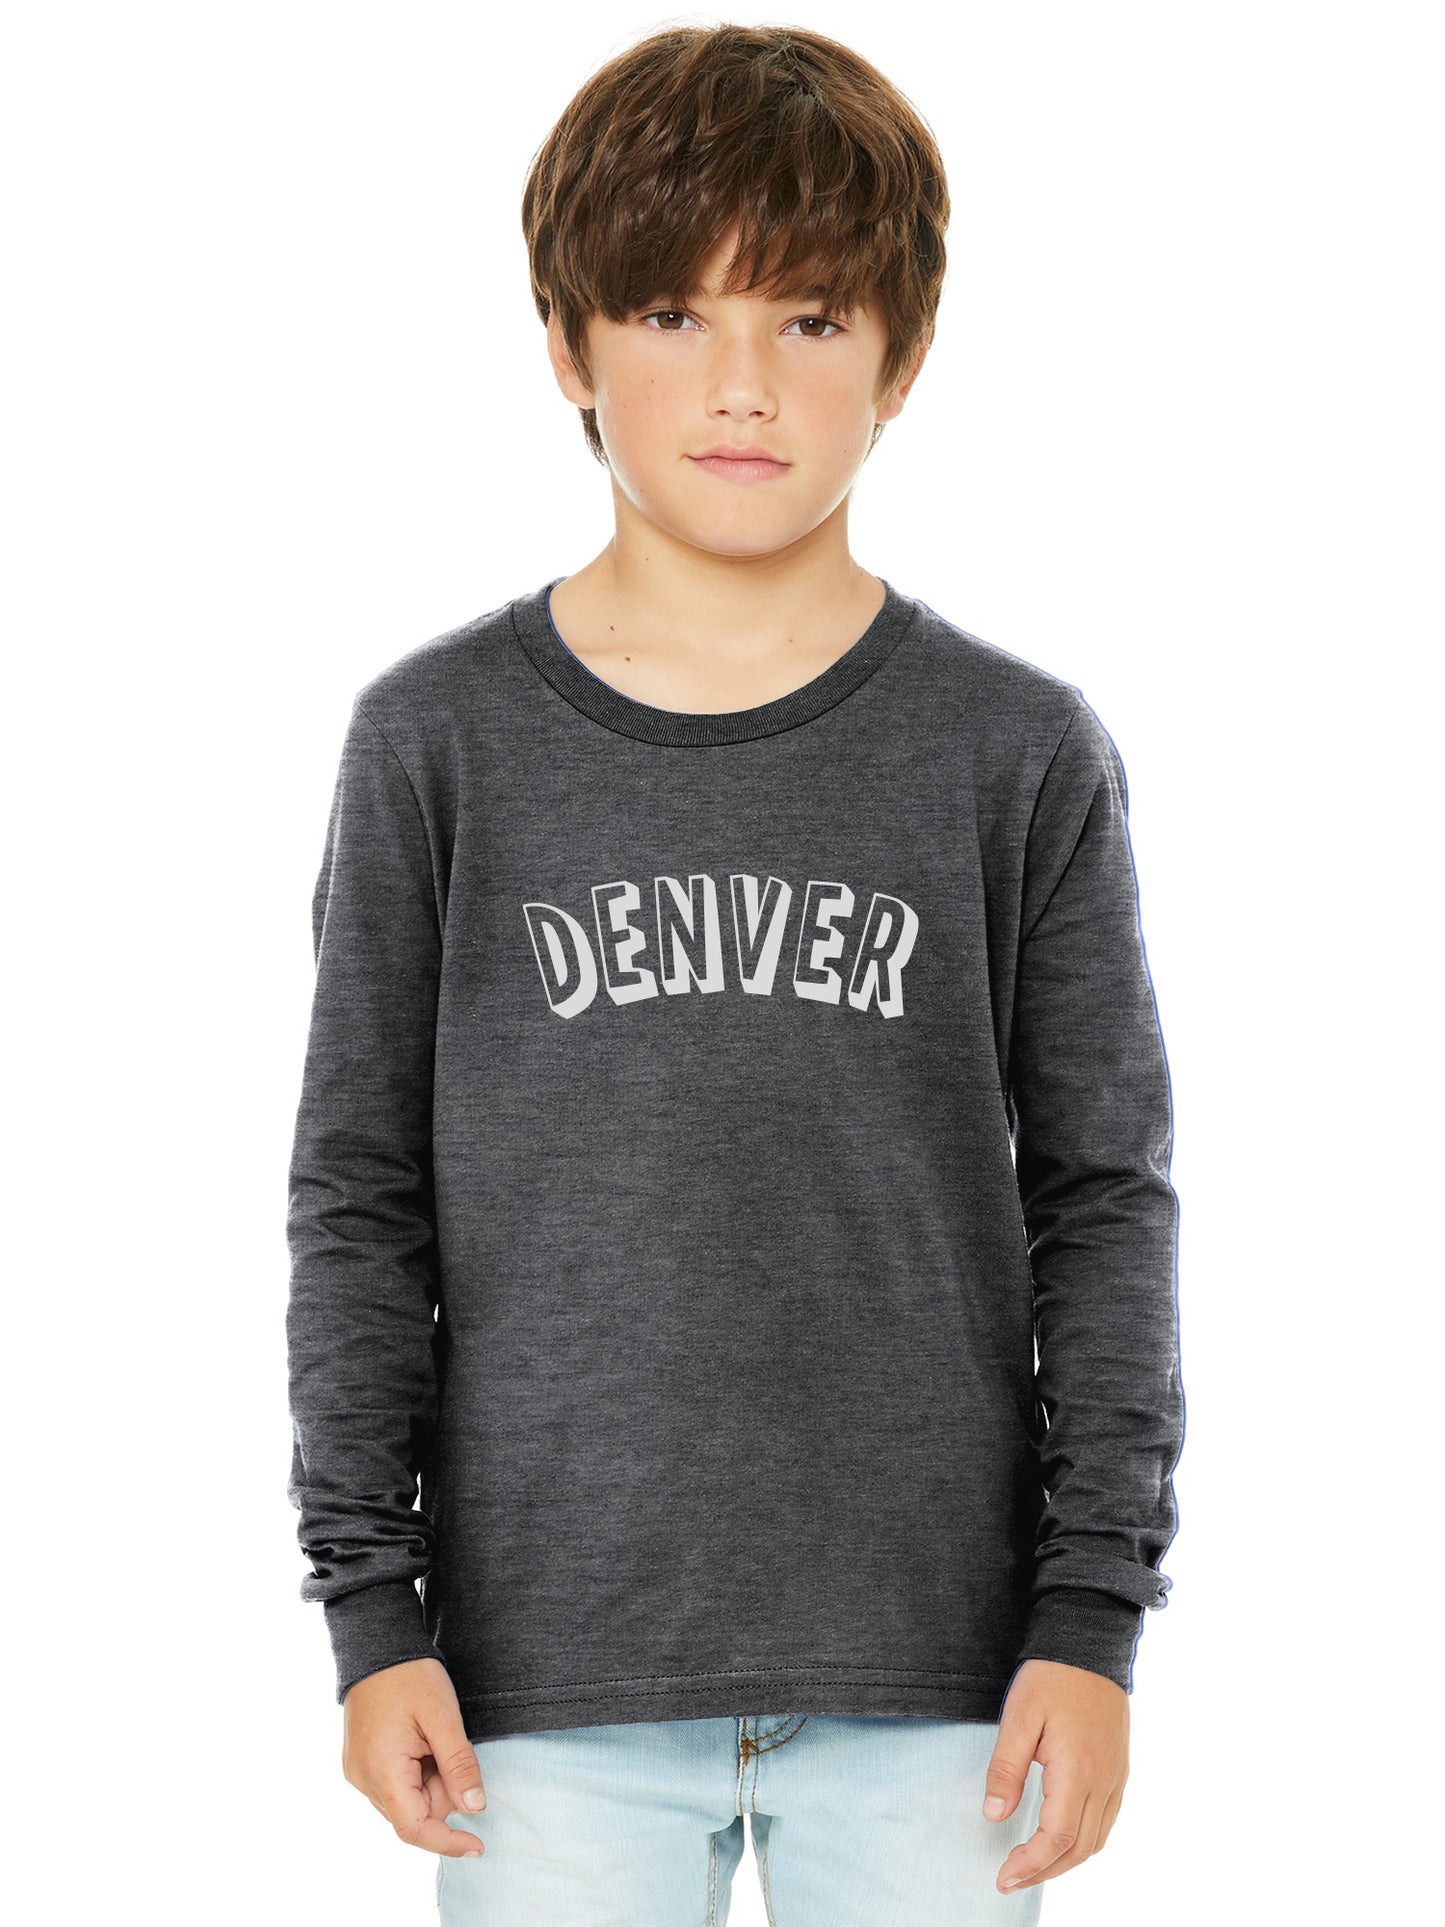 Daxton Youth Long Sleeve Denver Basic Tshirt